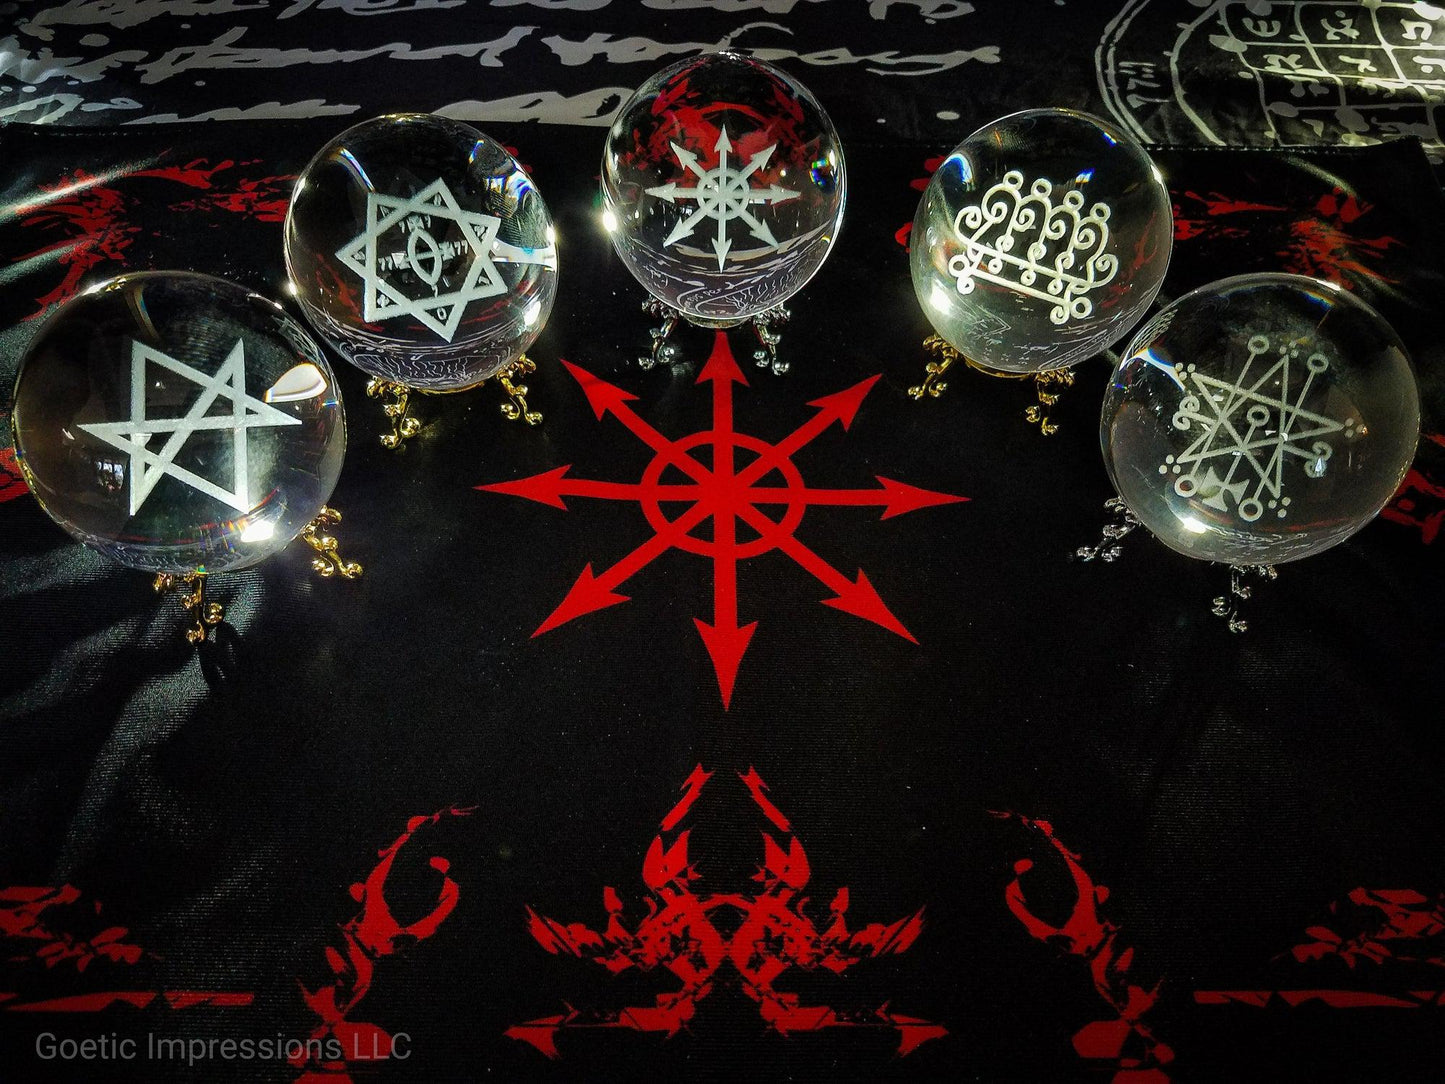 Occult sigil crystal balls